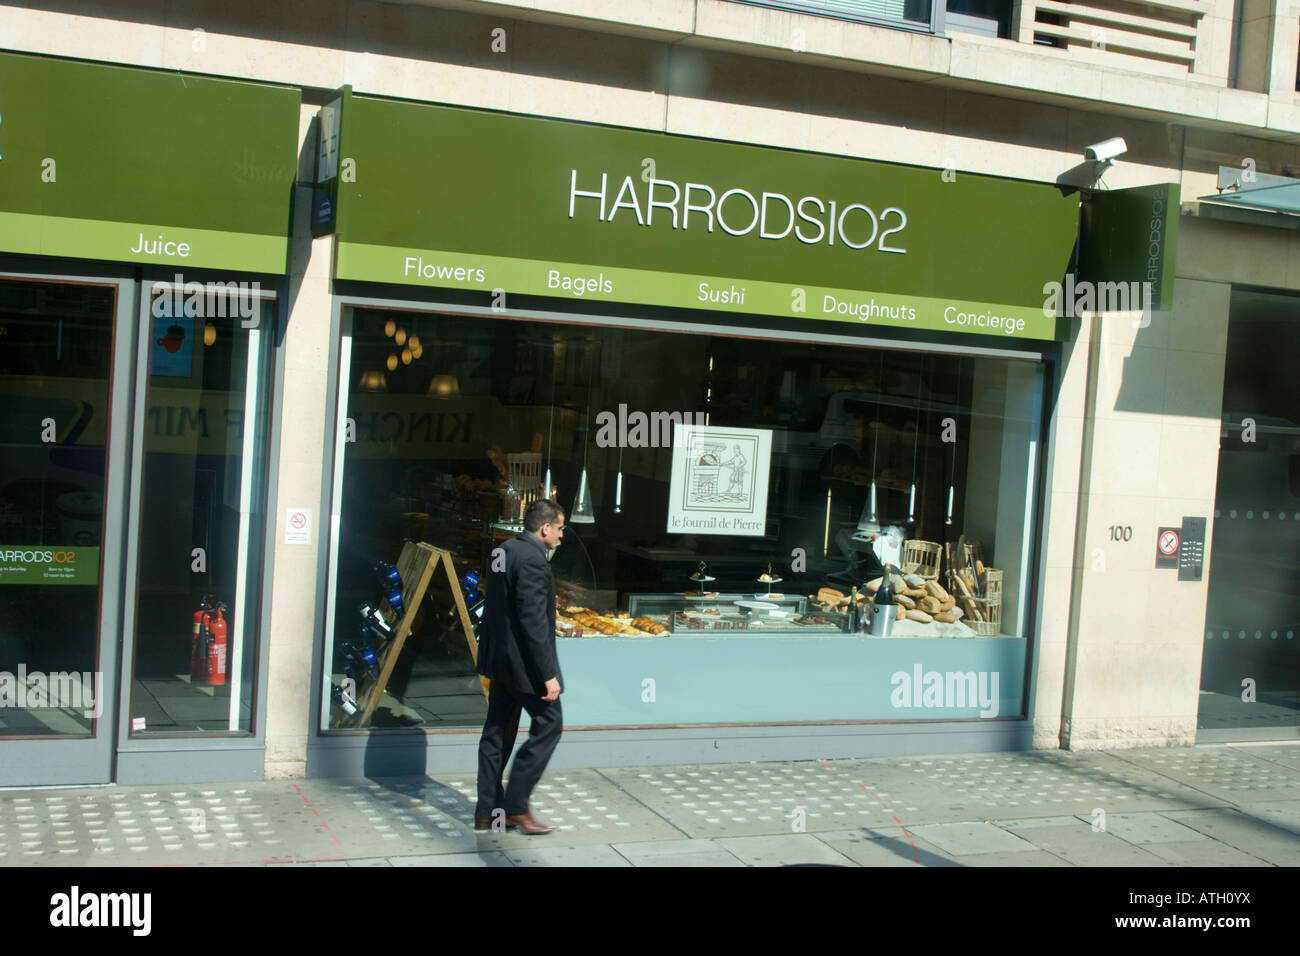 Harrods 102 sushi shop and restaurant in Knightsbridge London Stock Photo